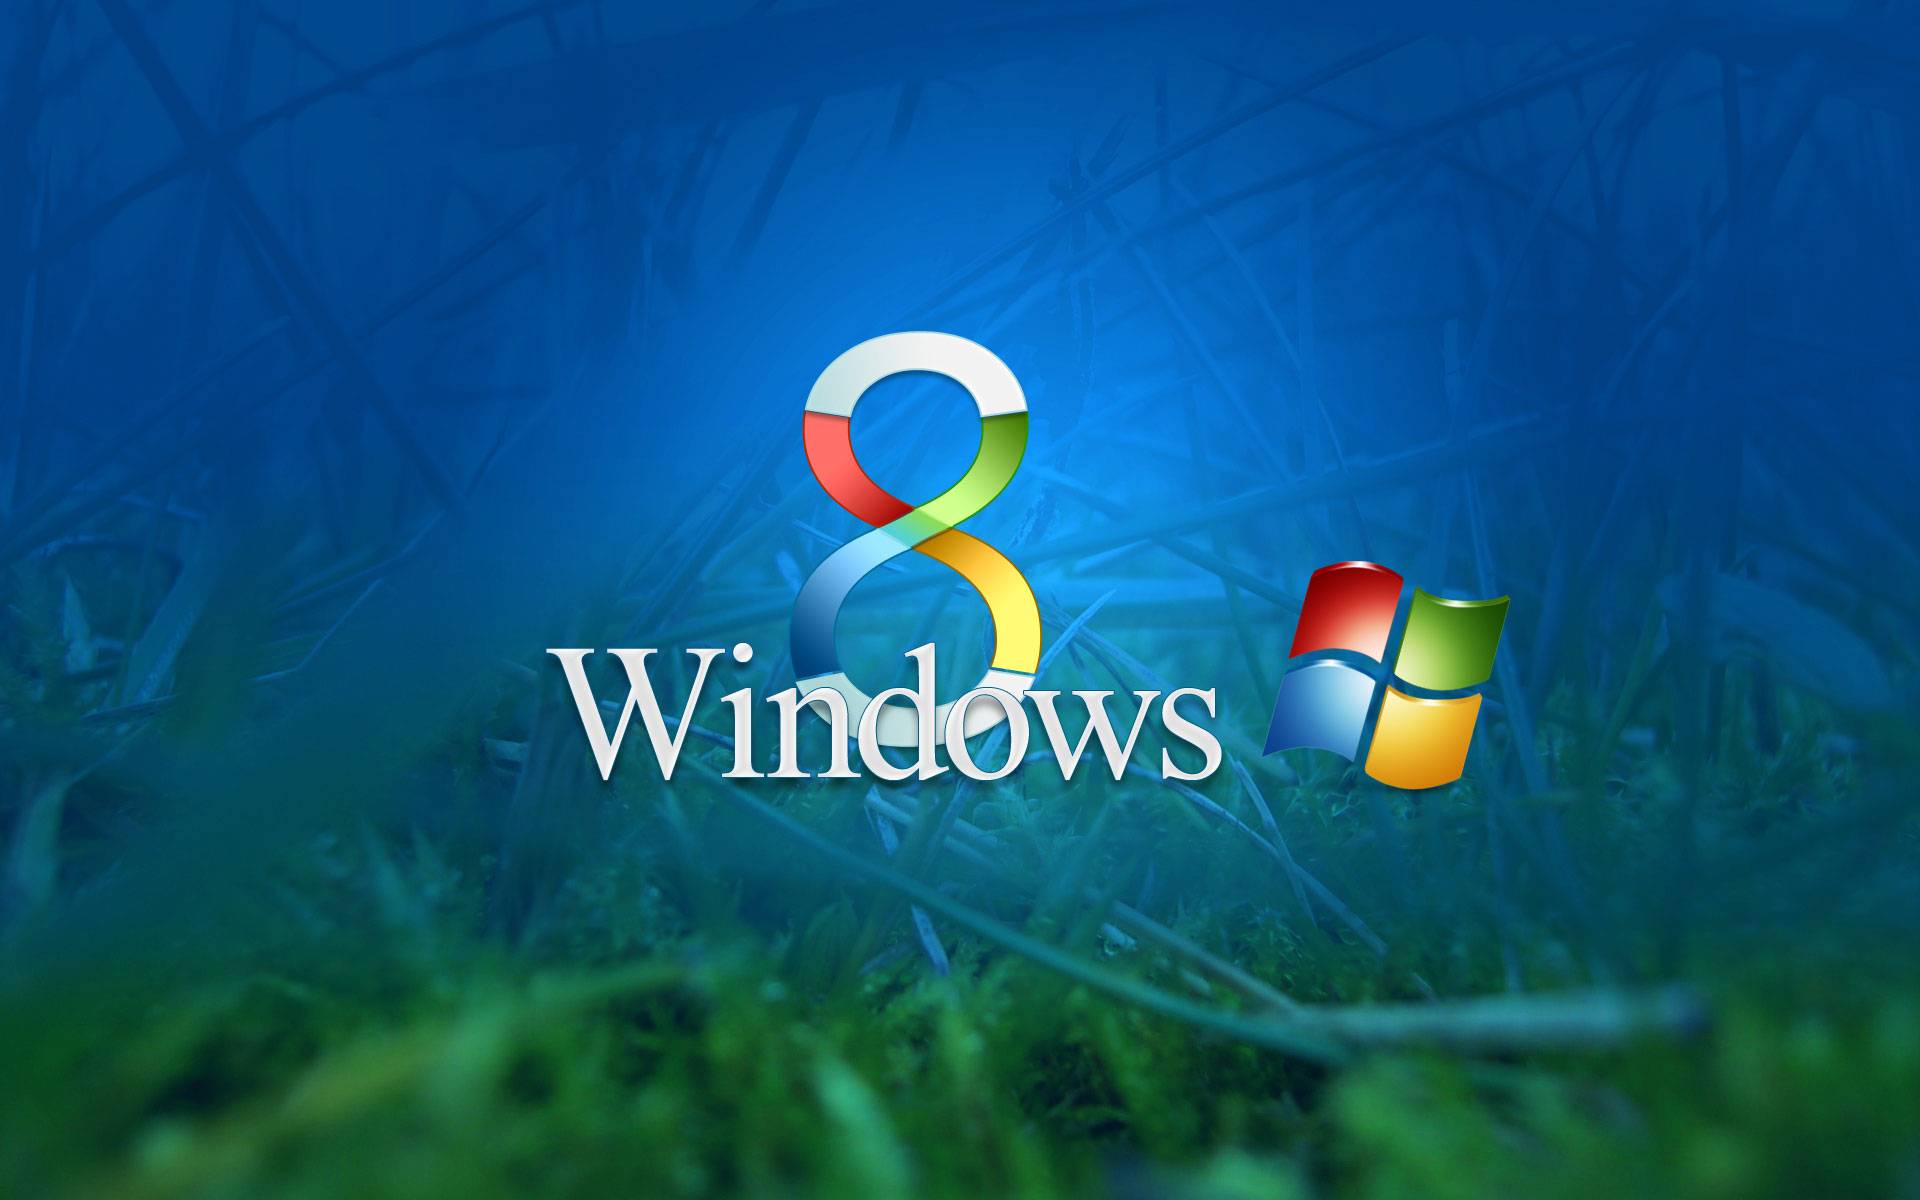 Wallpaper For > Windows 8 Desktop Background Themes